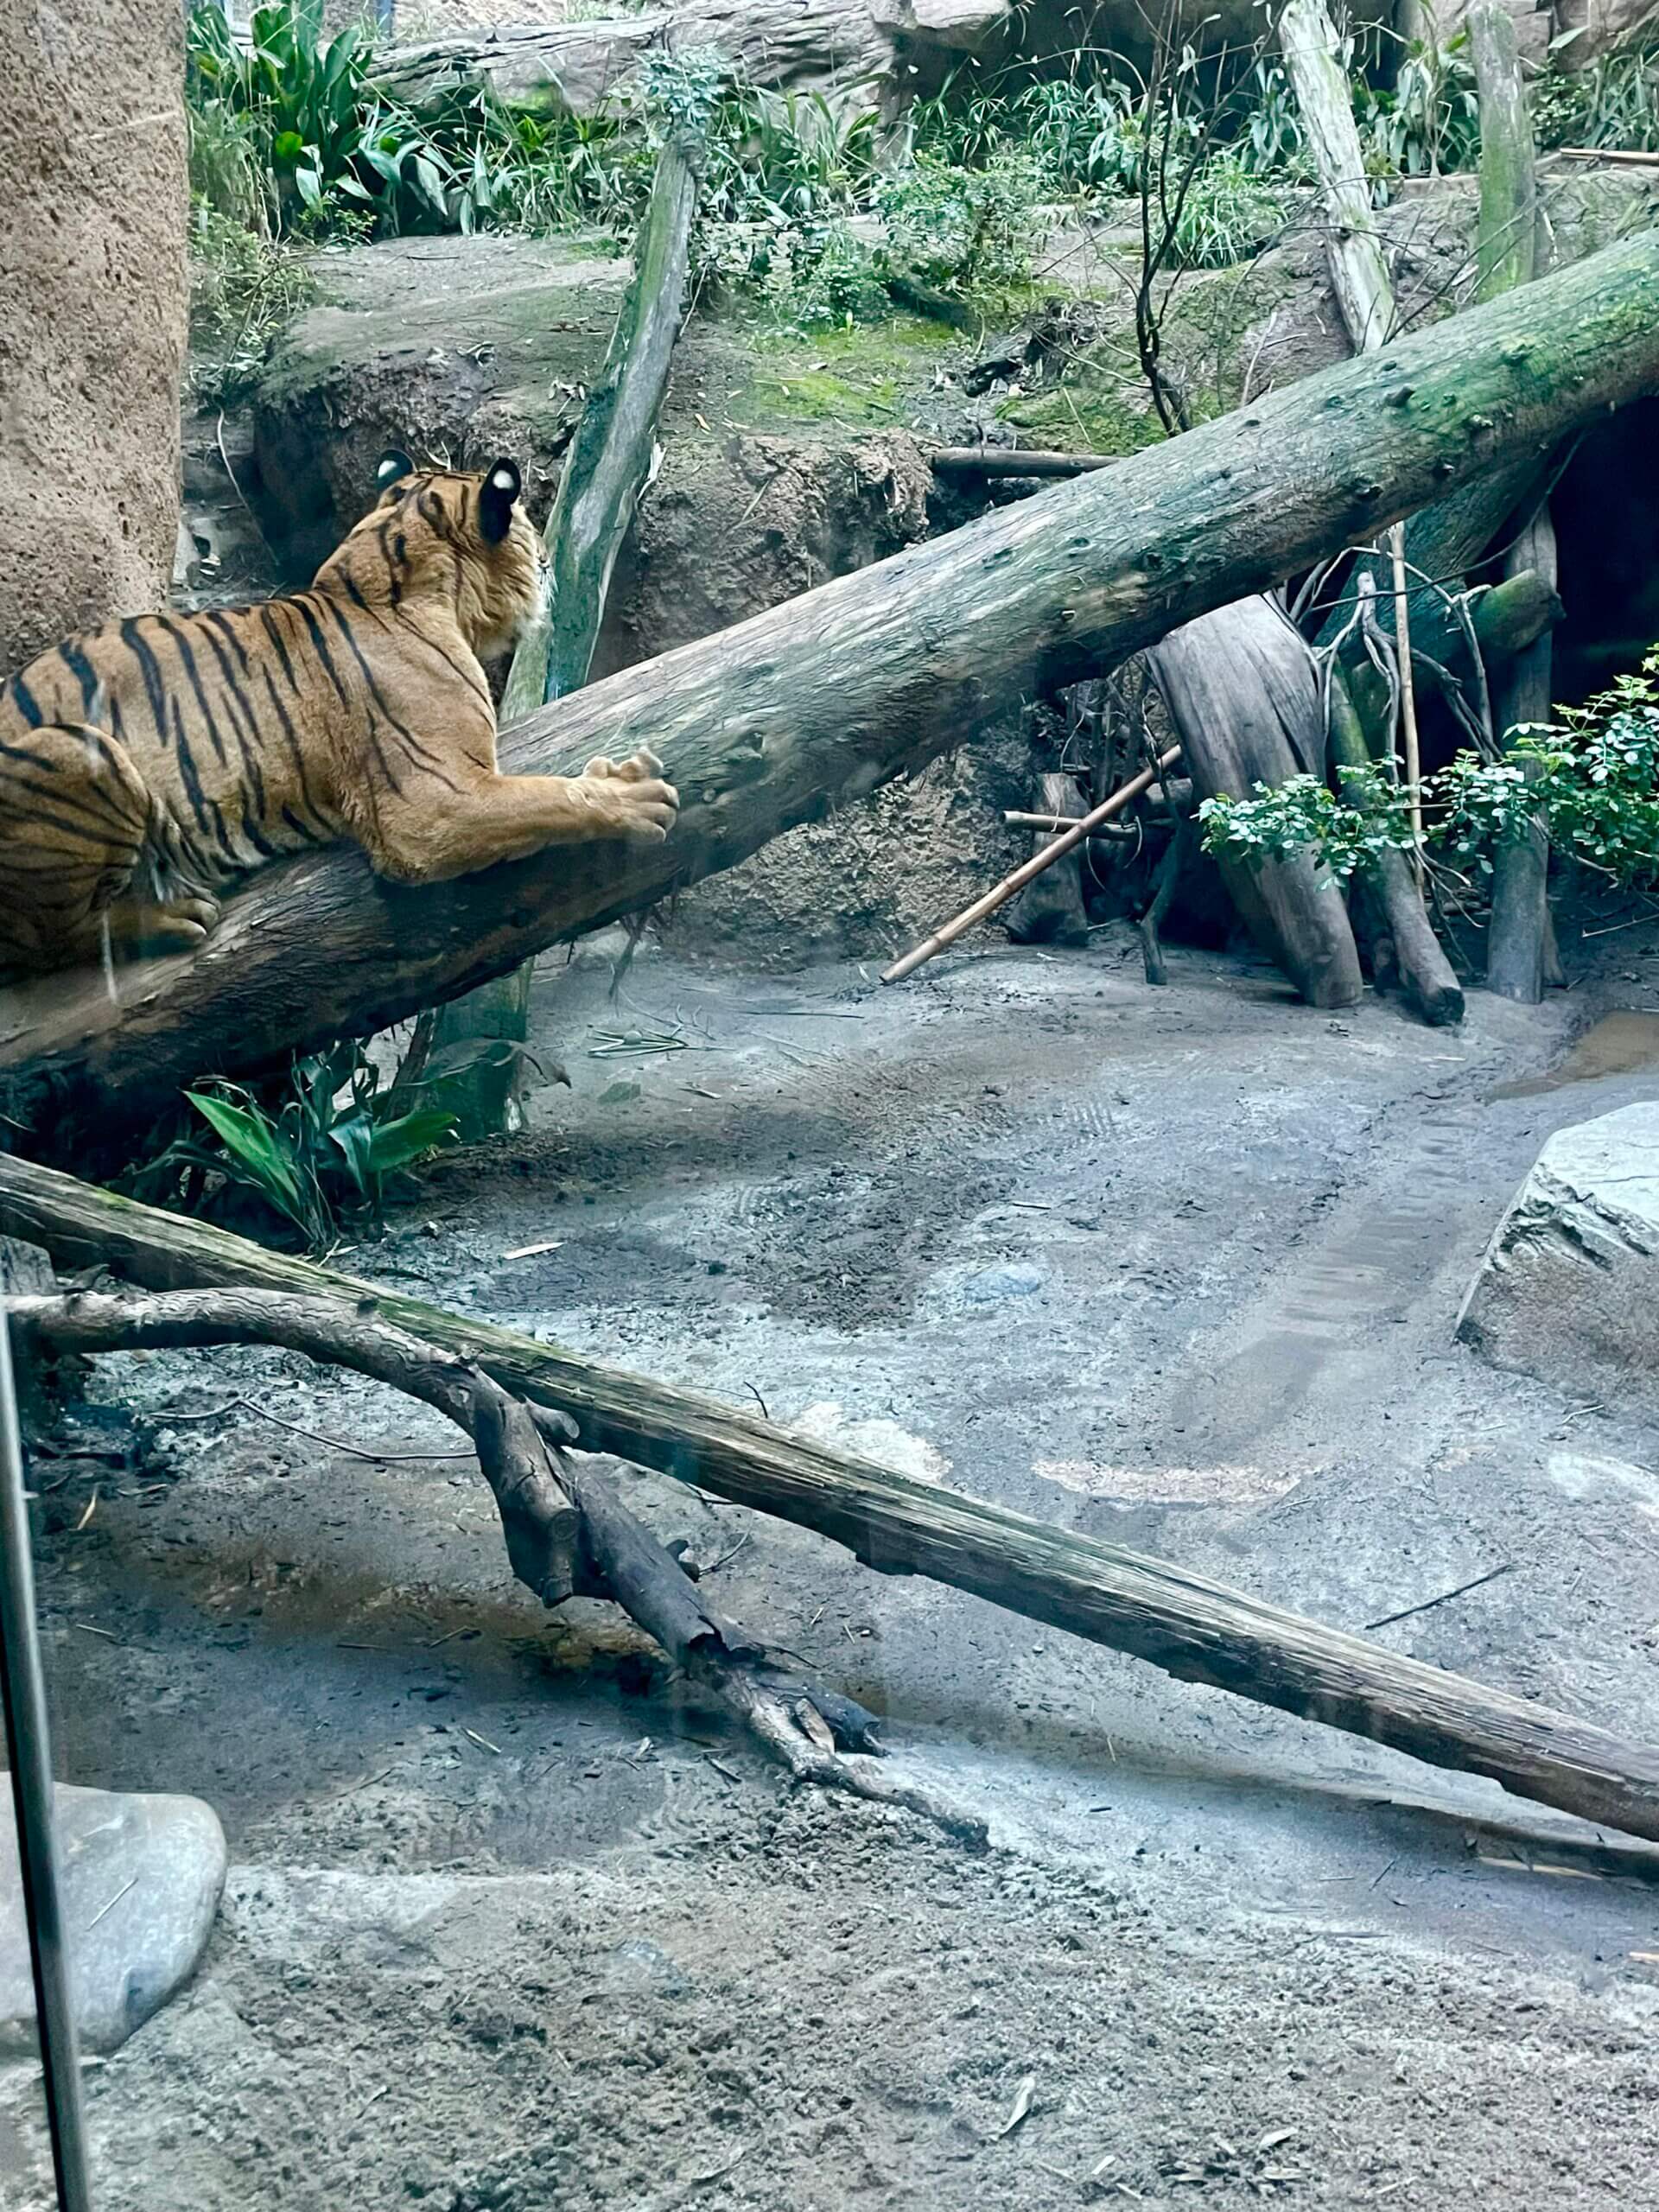 tiger, San Diego Zoo, visiting the San Diego Zoo, are zoos ethical?, are zoos bad?, are zoos as bad as seaworld?, is animal captivity ever okay?